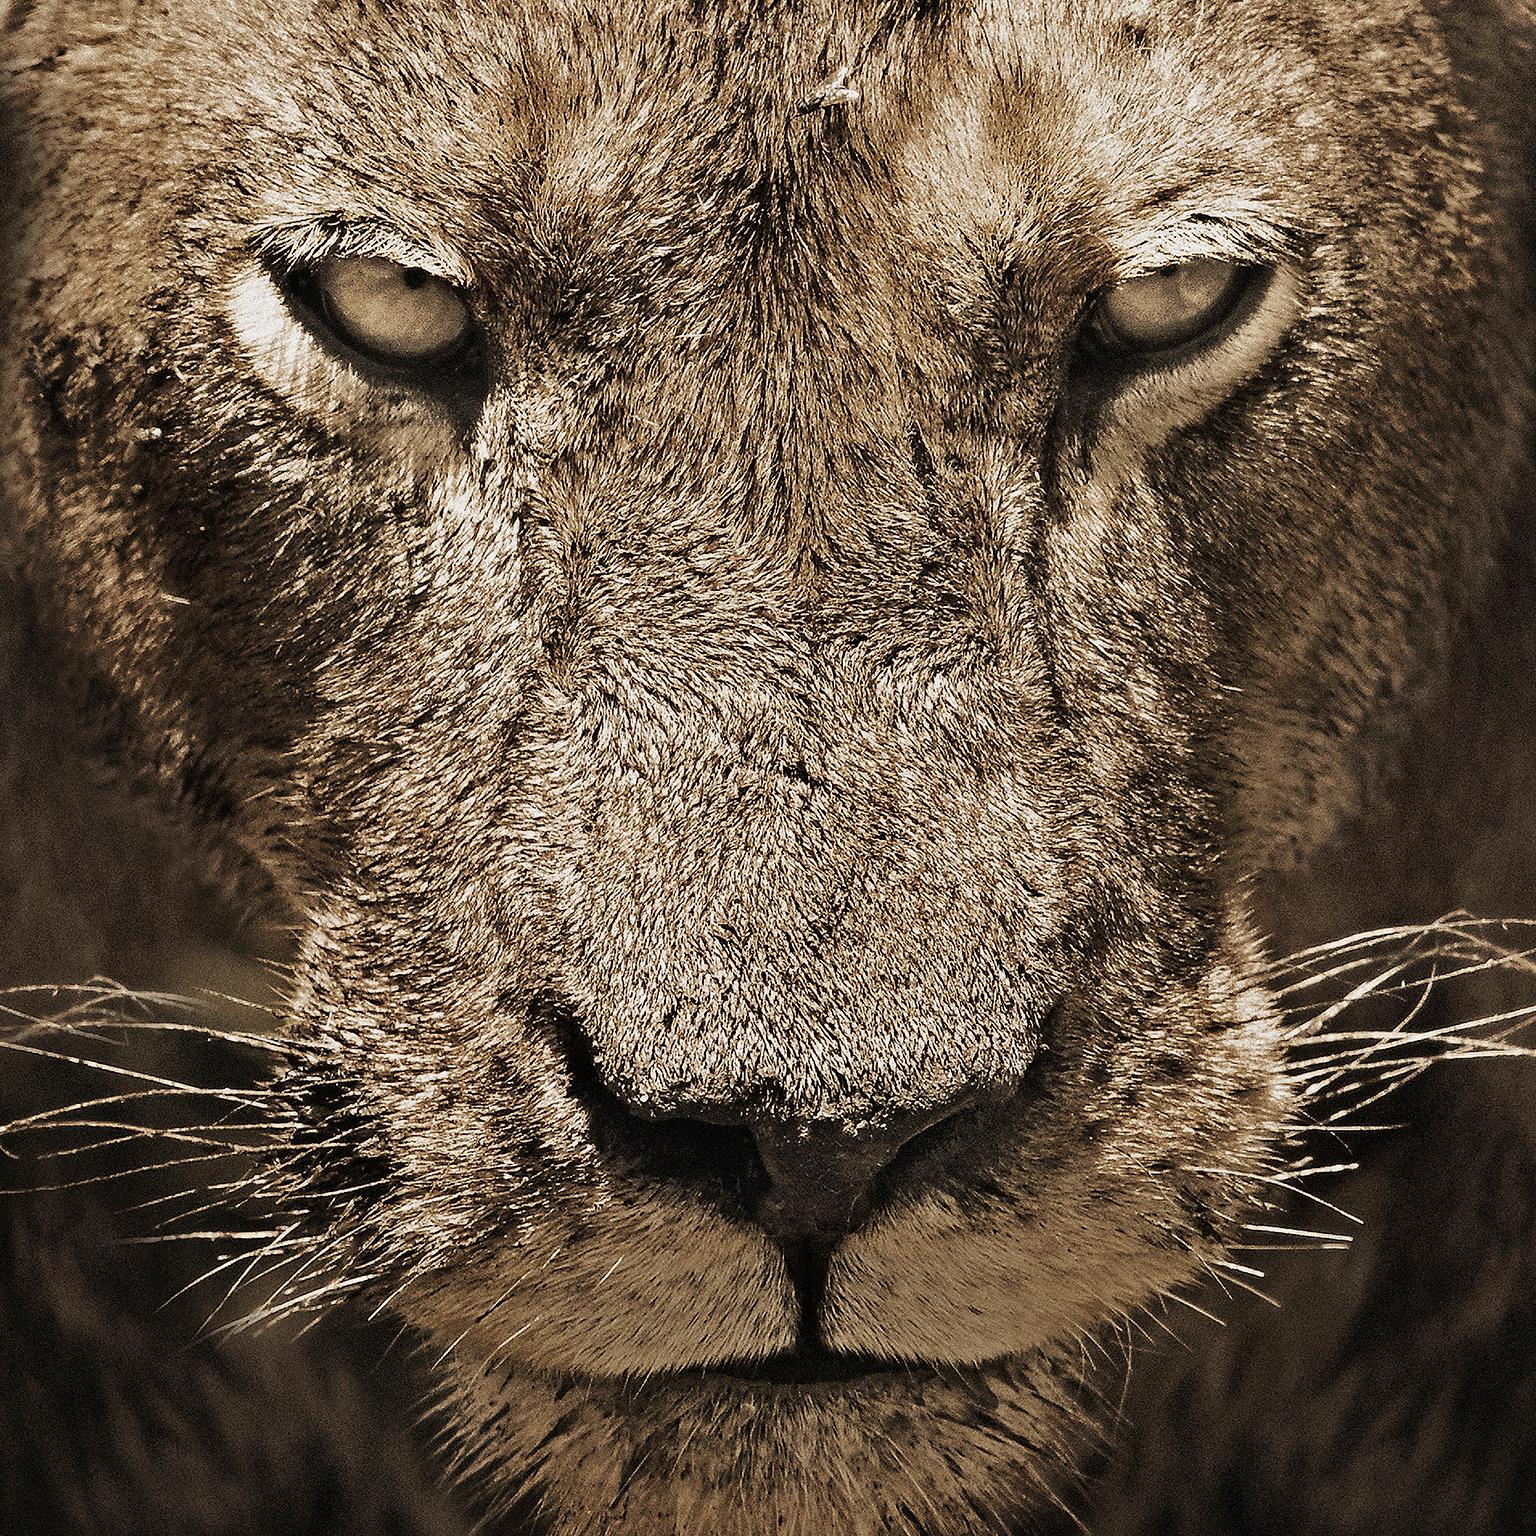 Lion No. 1 - Photograph by Chris Gordaneer